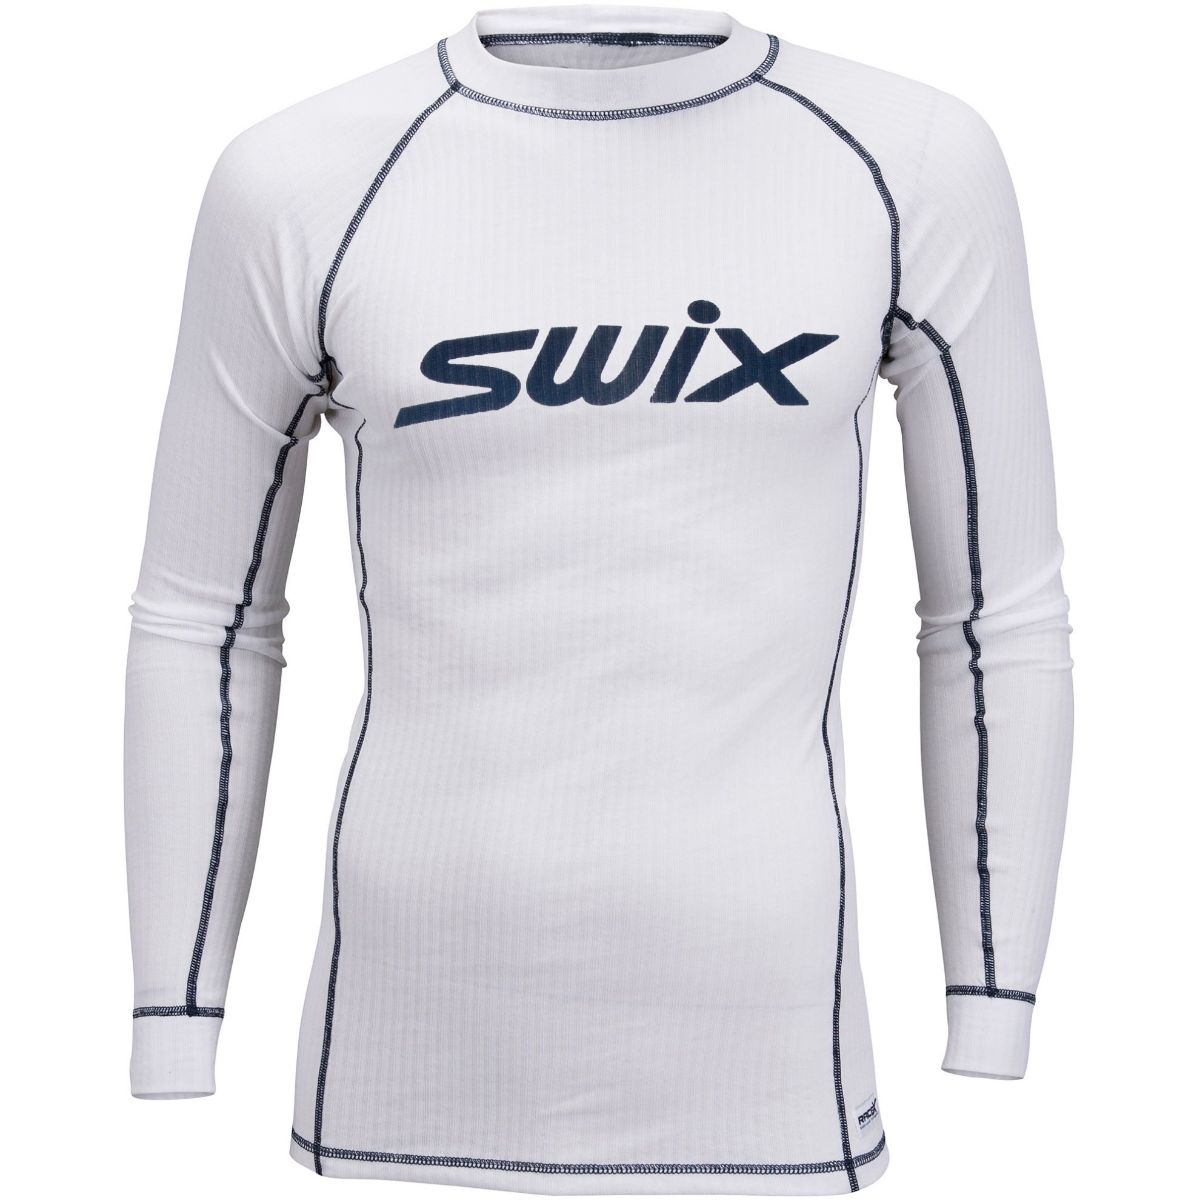 swix-racex-top-herre-hvit-treningsoverdel